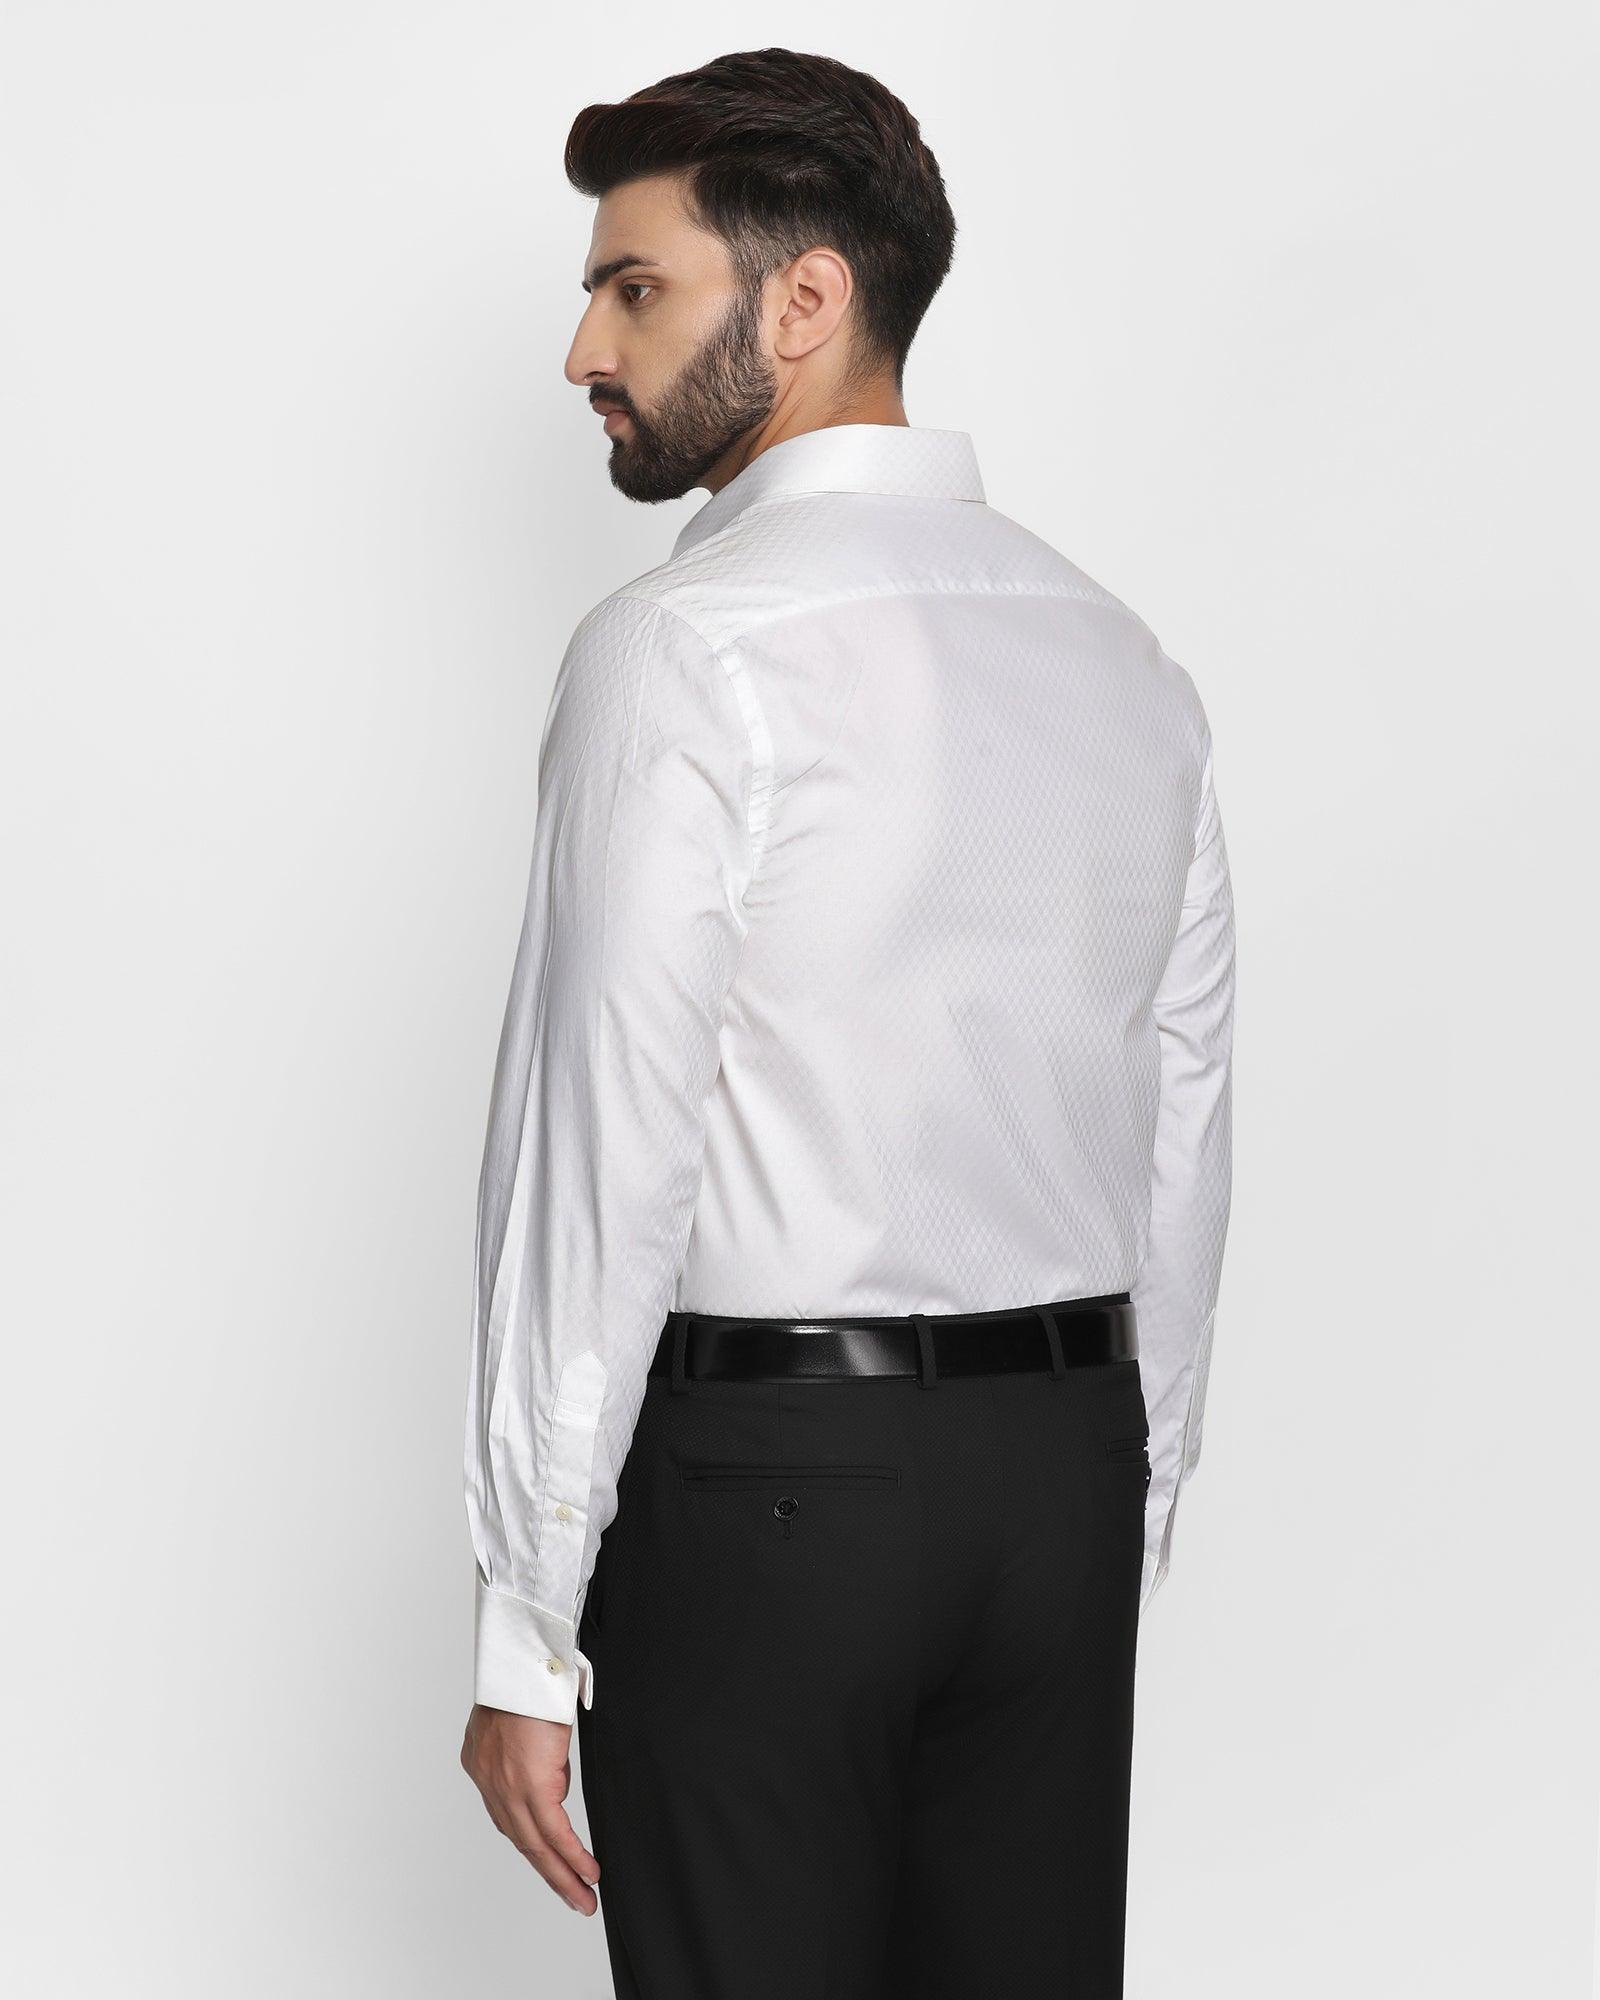 Formal White Textured Shirt - Ajax